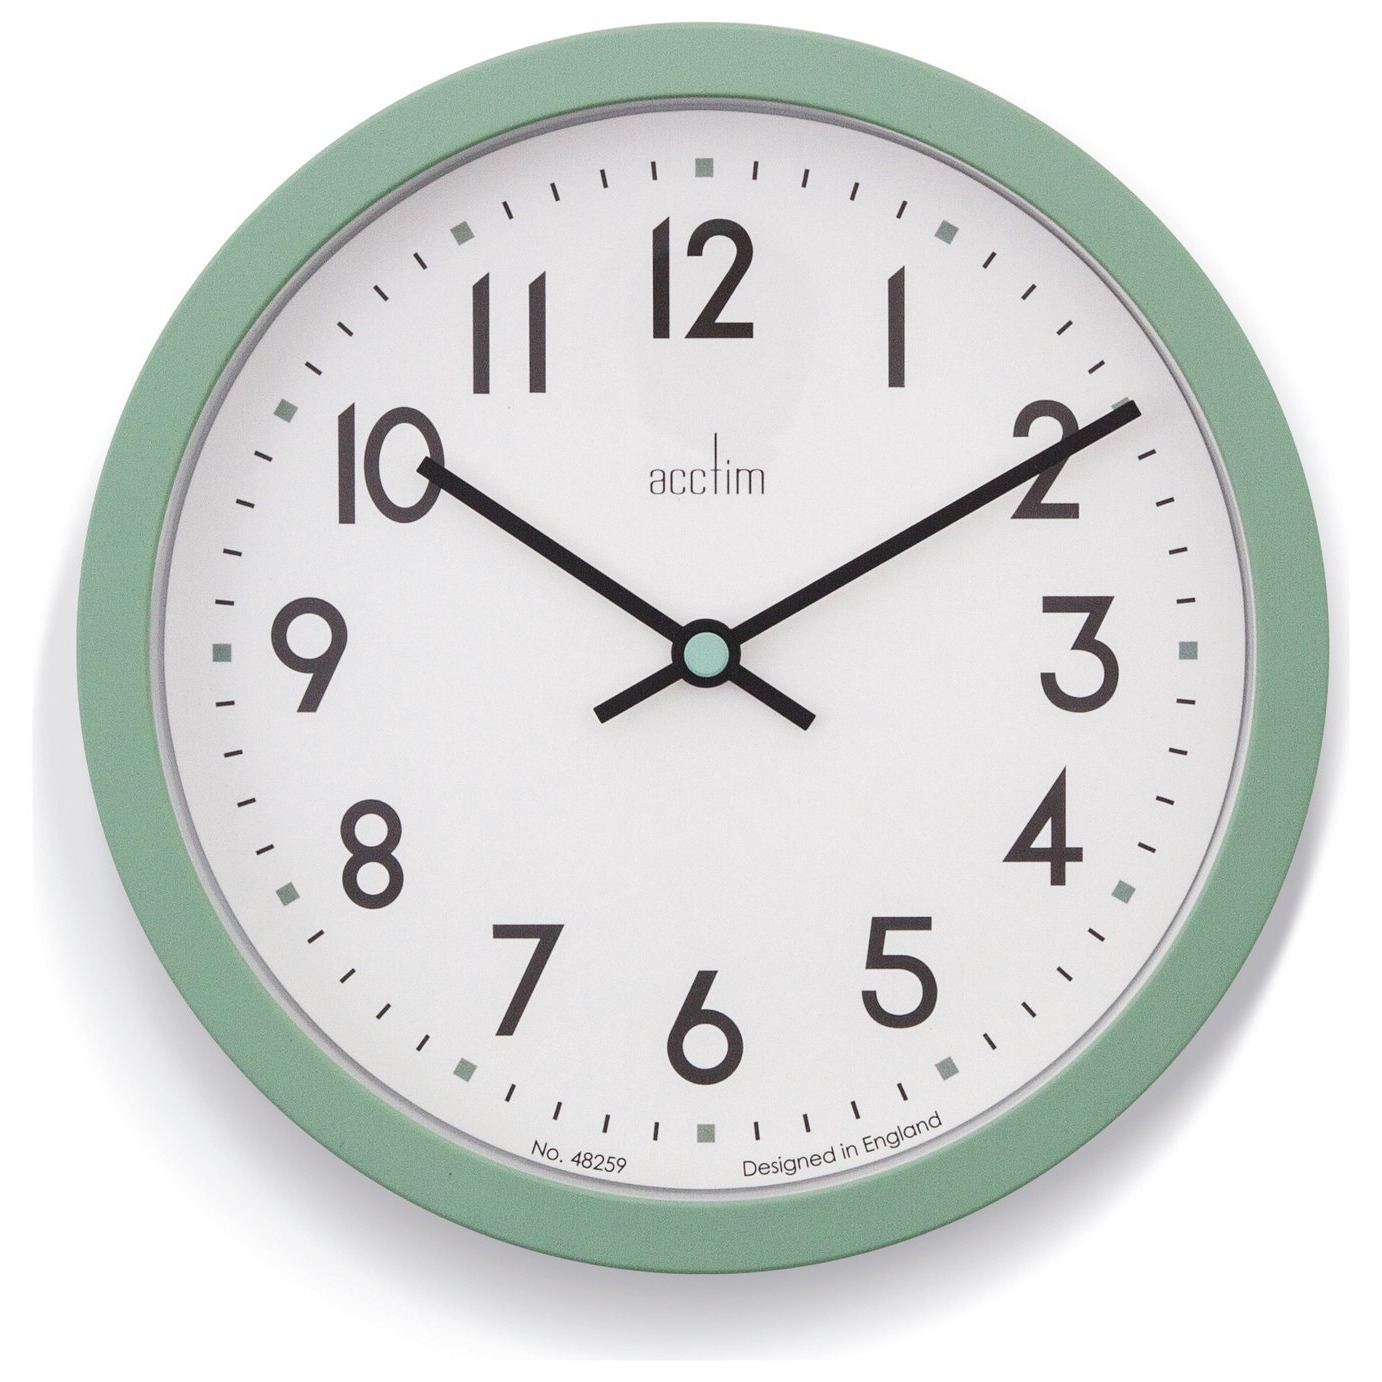 Acctim Elstow Analogue Wall Clock - Green - image 1